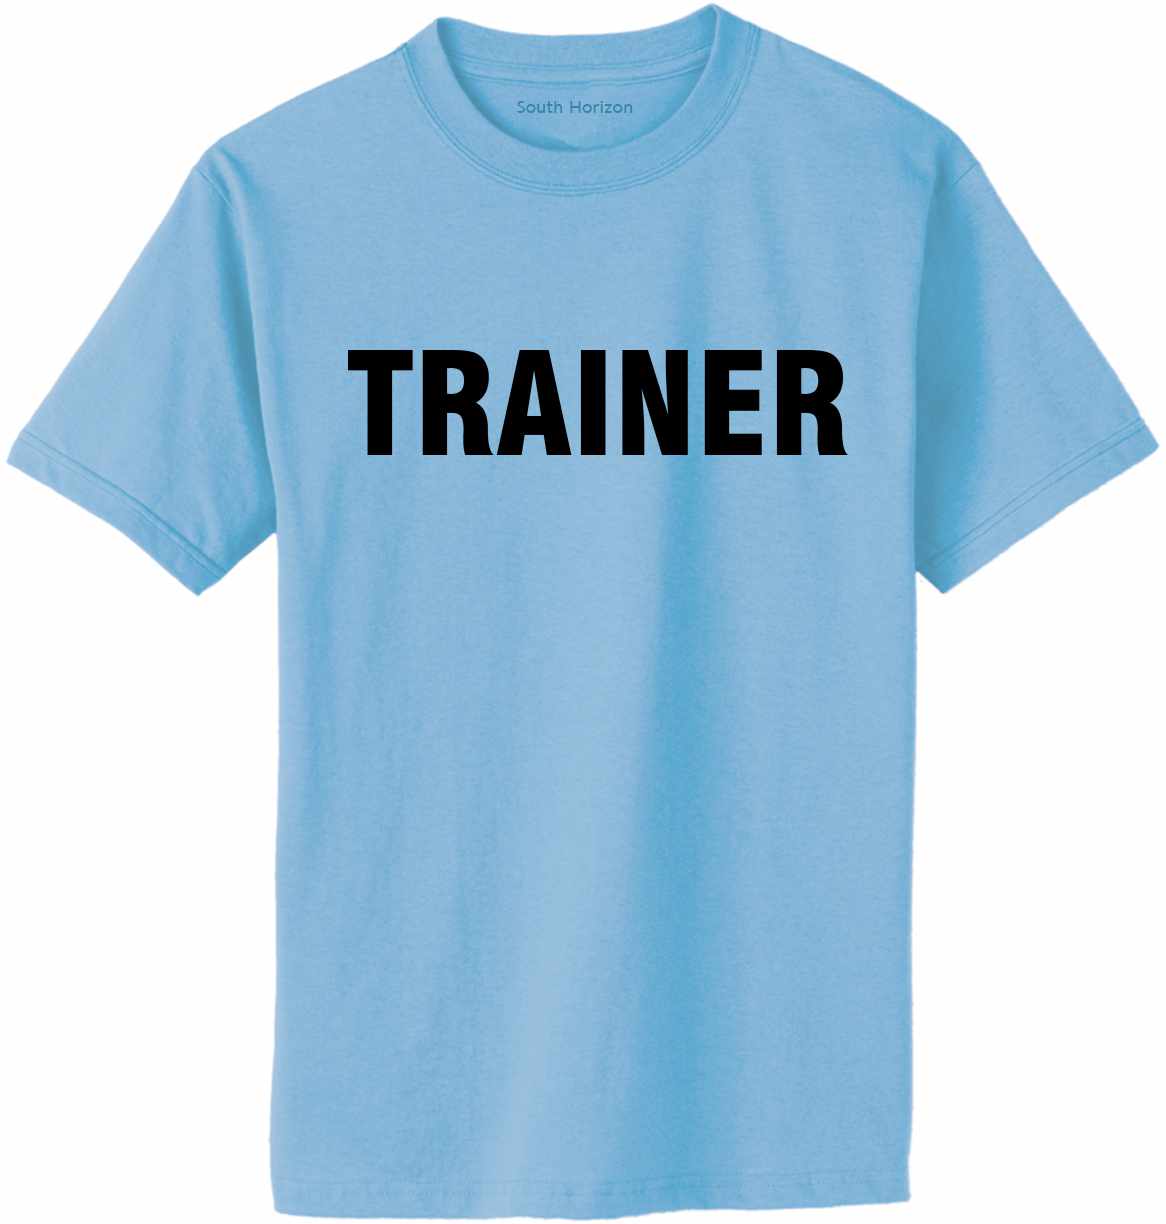 TRAINER Adult T-Shirt (#248-1)